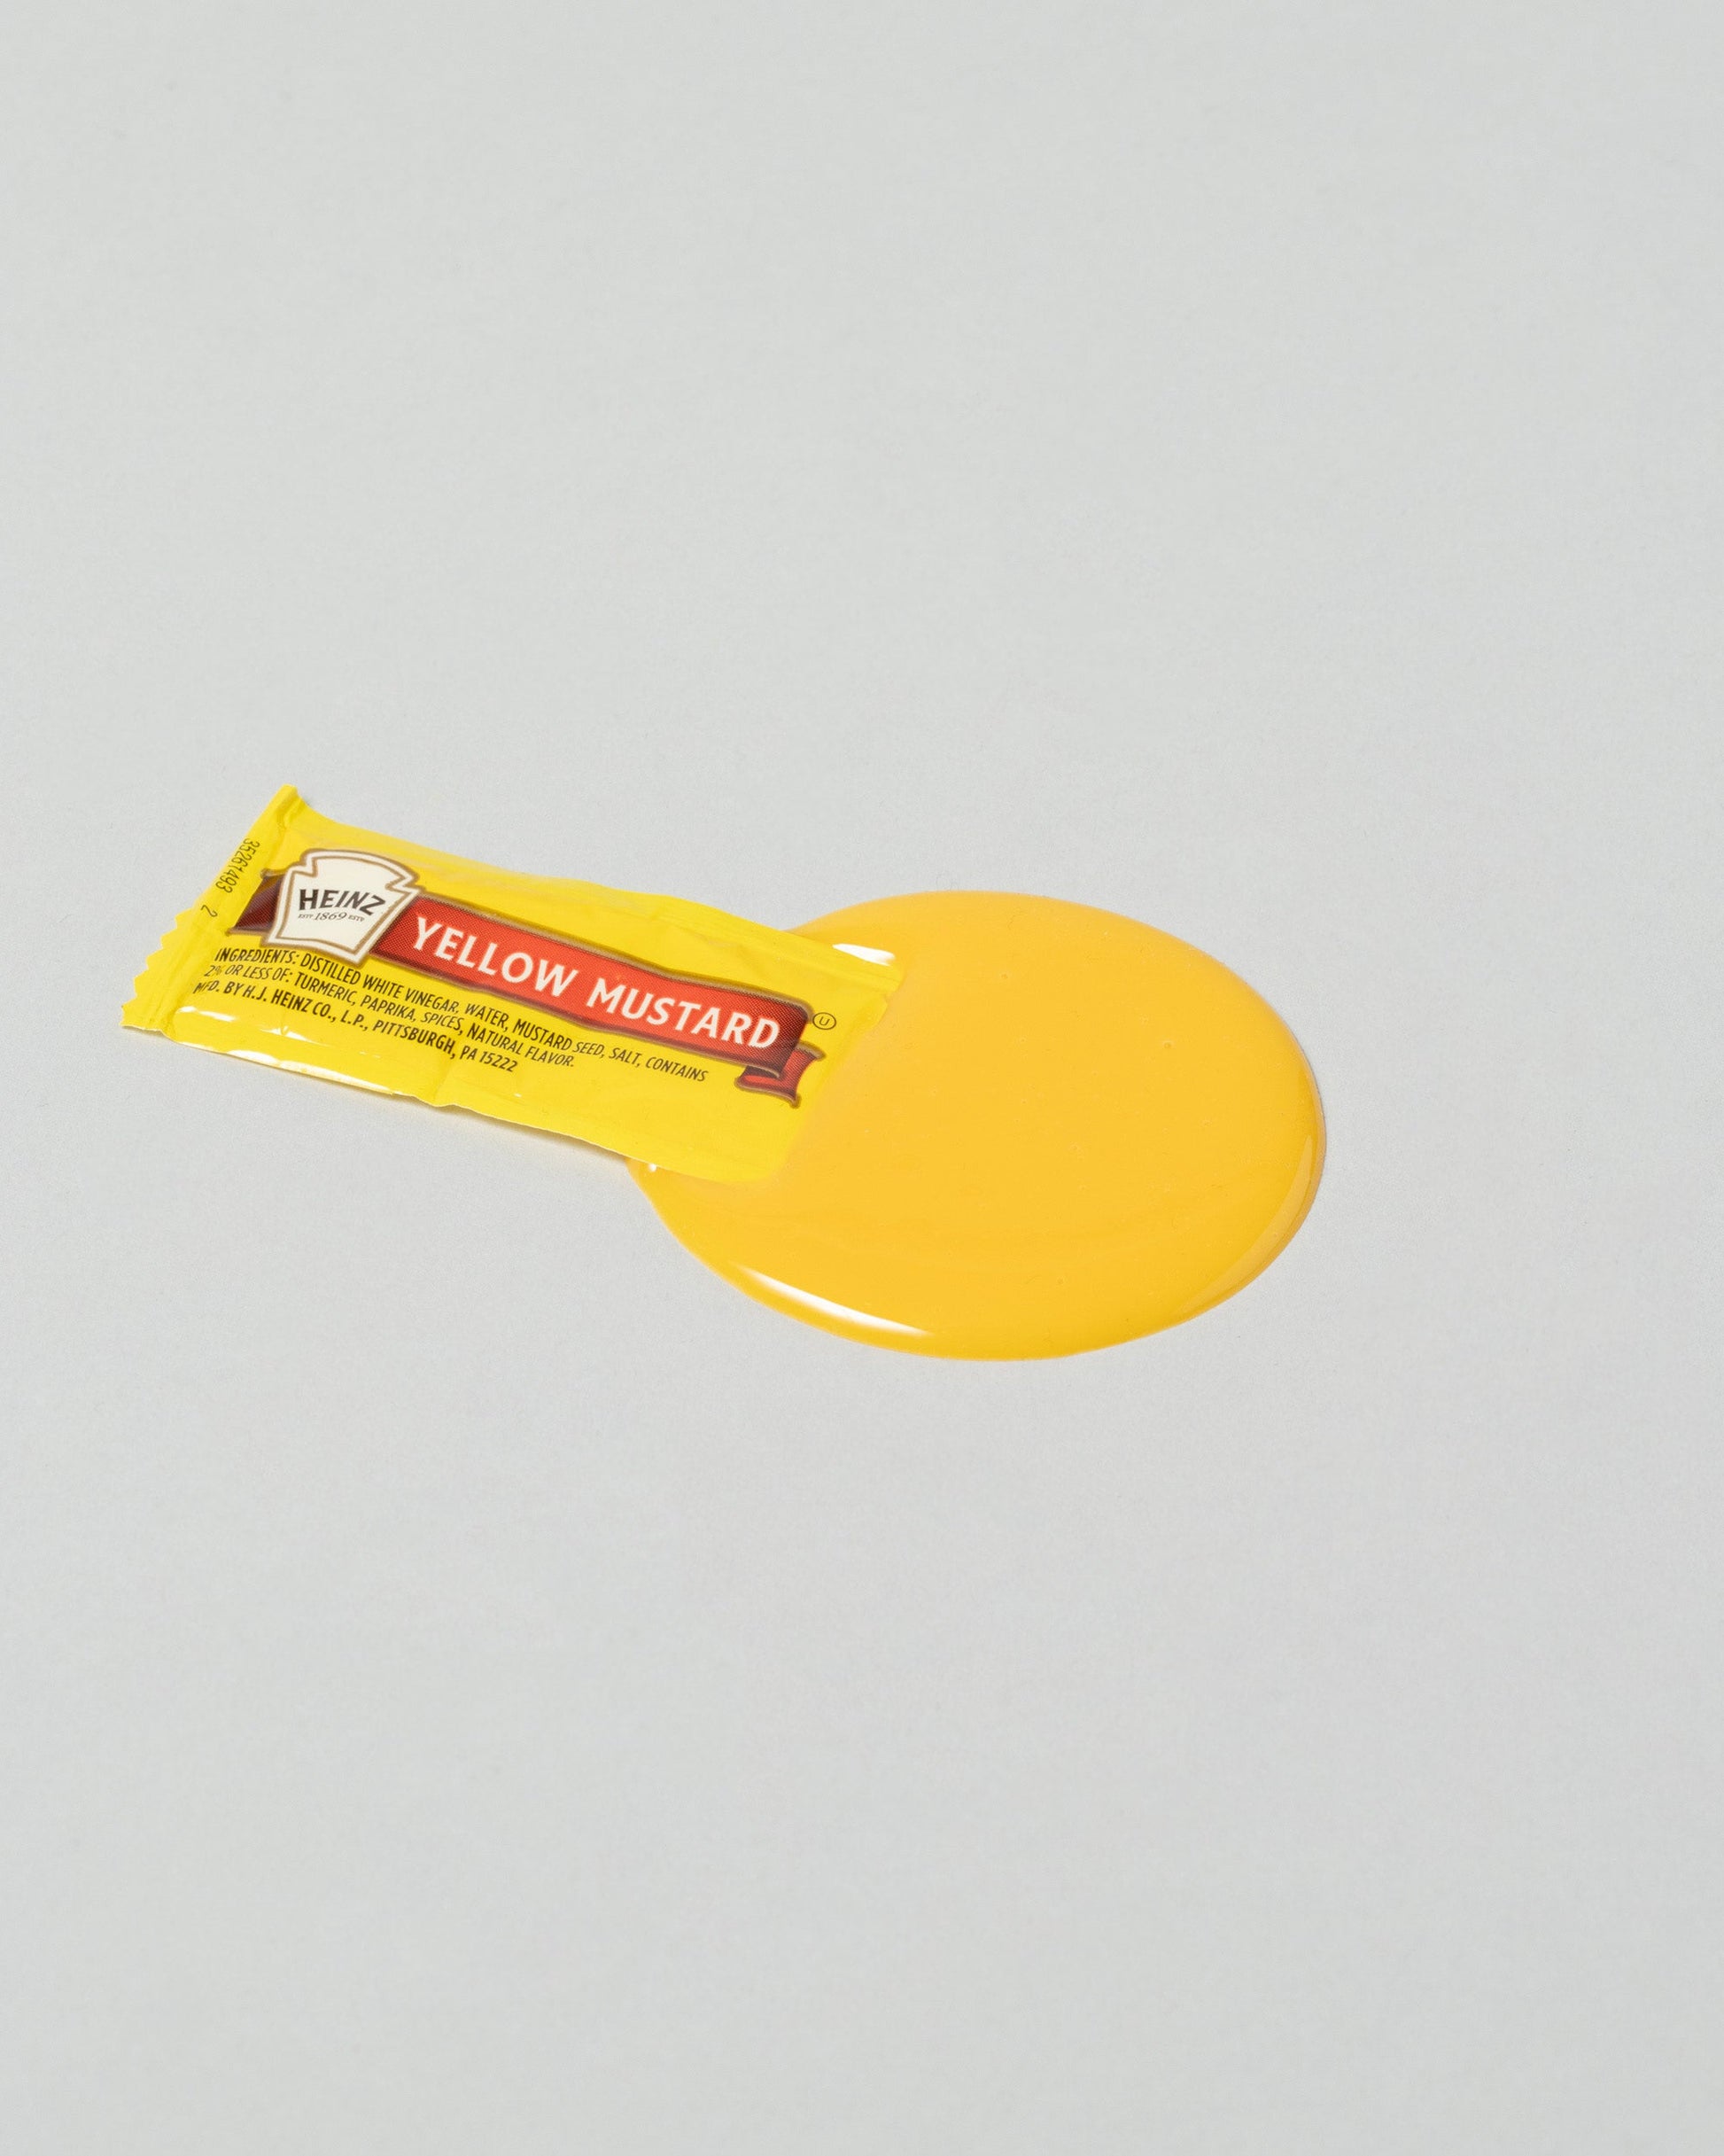 Spills Mustard Pack Condiment Pack on light color background.